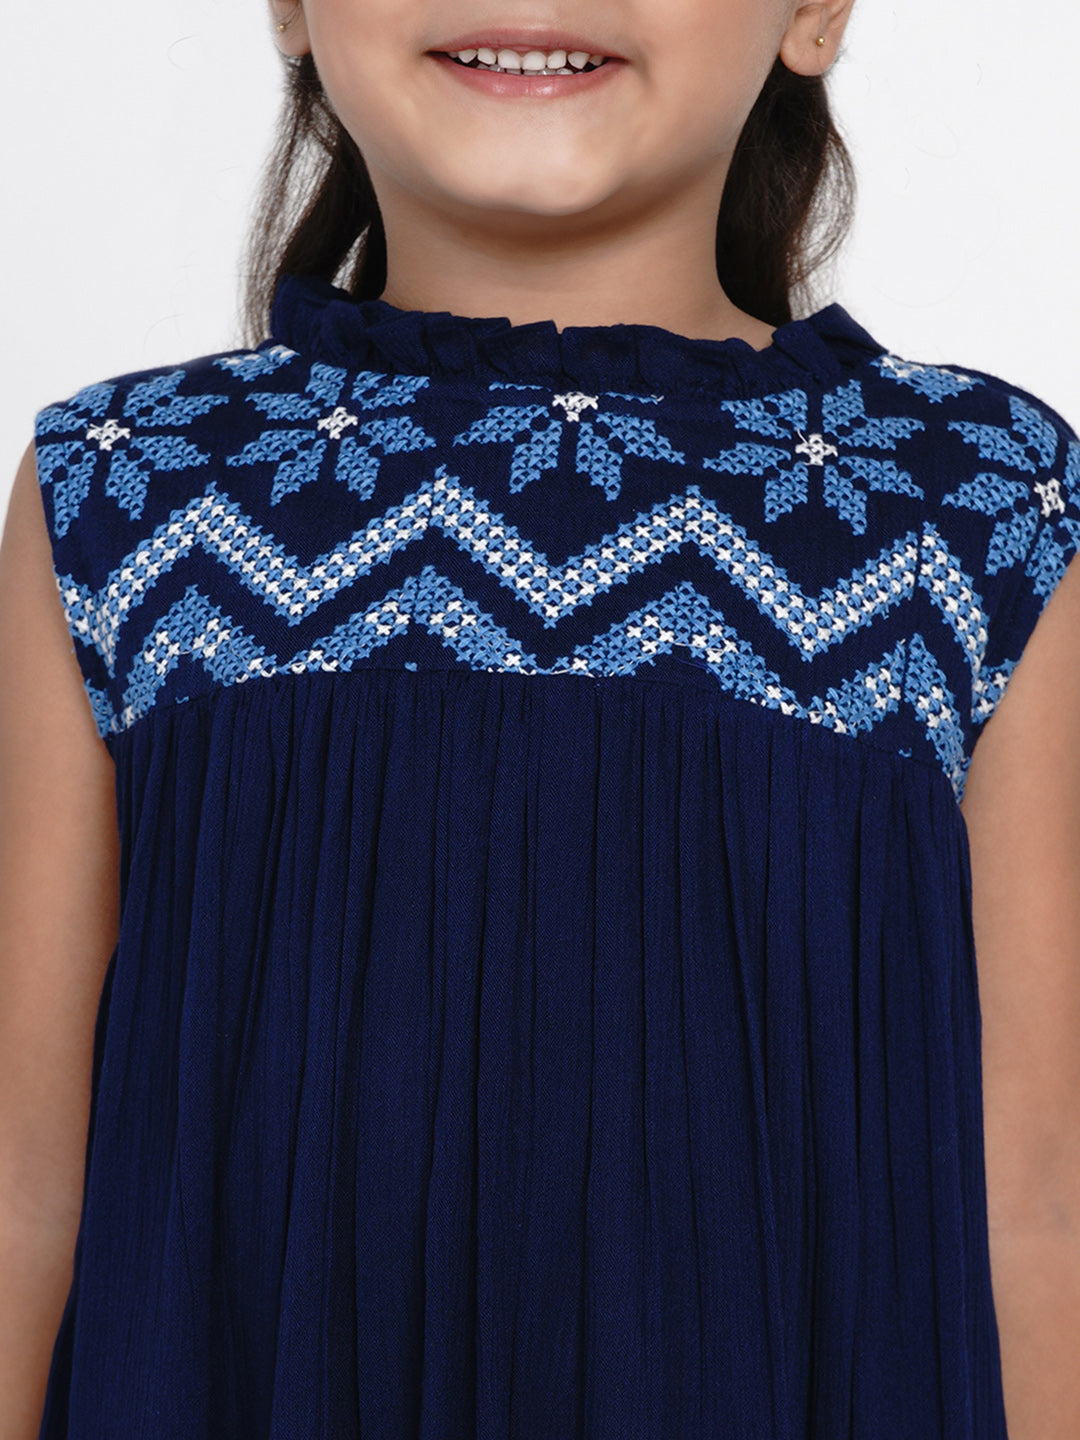 Bitiya By Bhama Girls Navy Blue Embroidered A-Line Dress